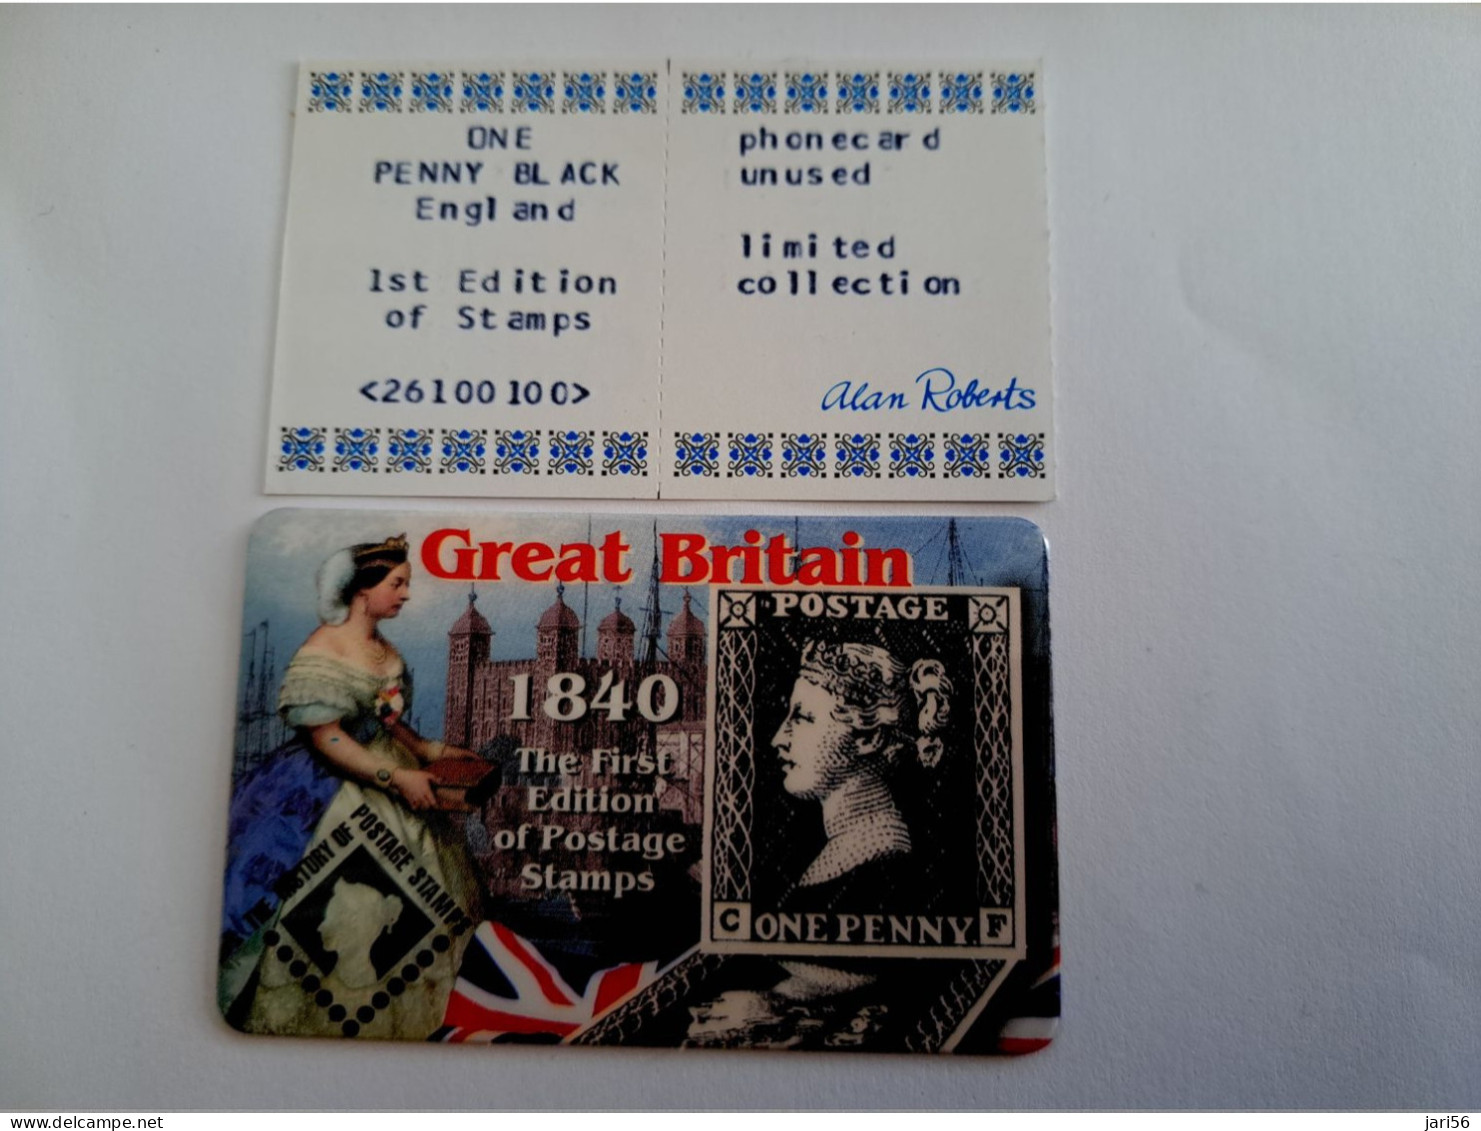 GREAT BRITAIN /20 UNITS / PENNY BLACK  1840 / DATE 06/2002     /    PREPAID CARD / LIMITED EDITION/ MINT  **15703** - [10] Sammlungen